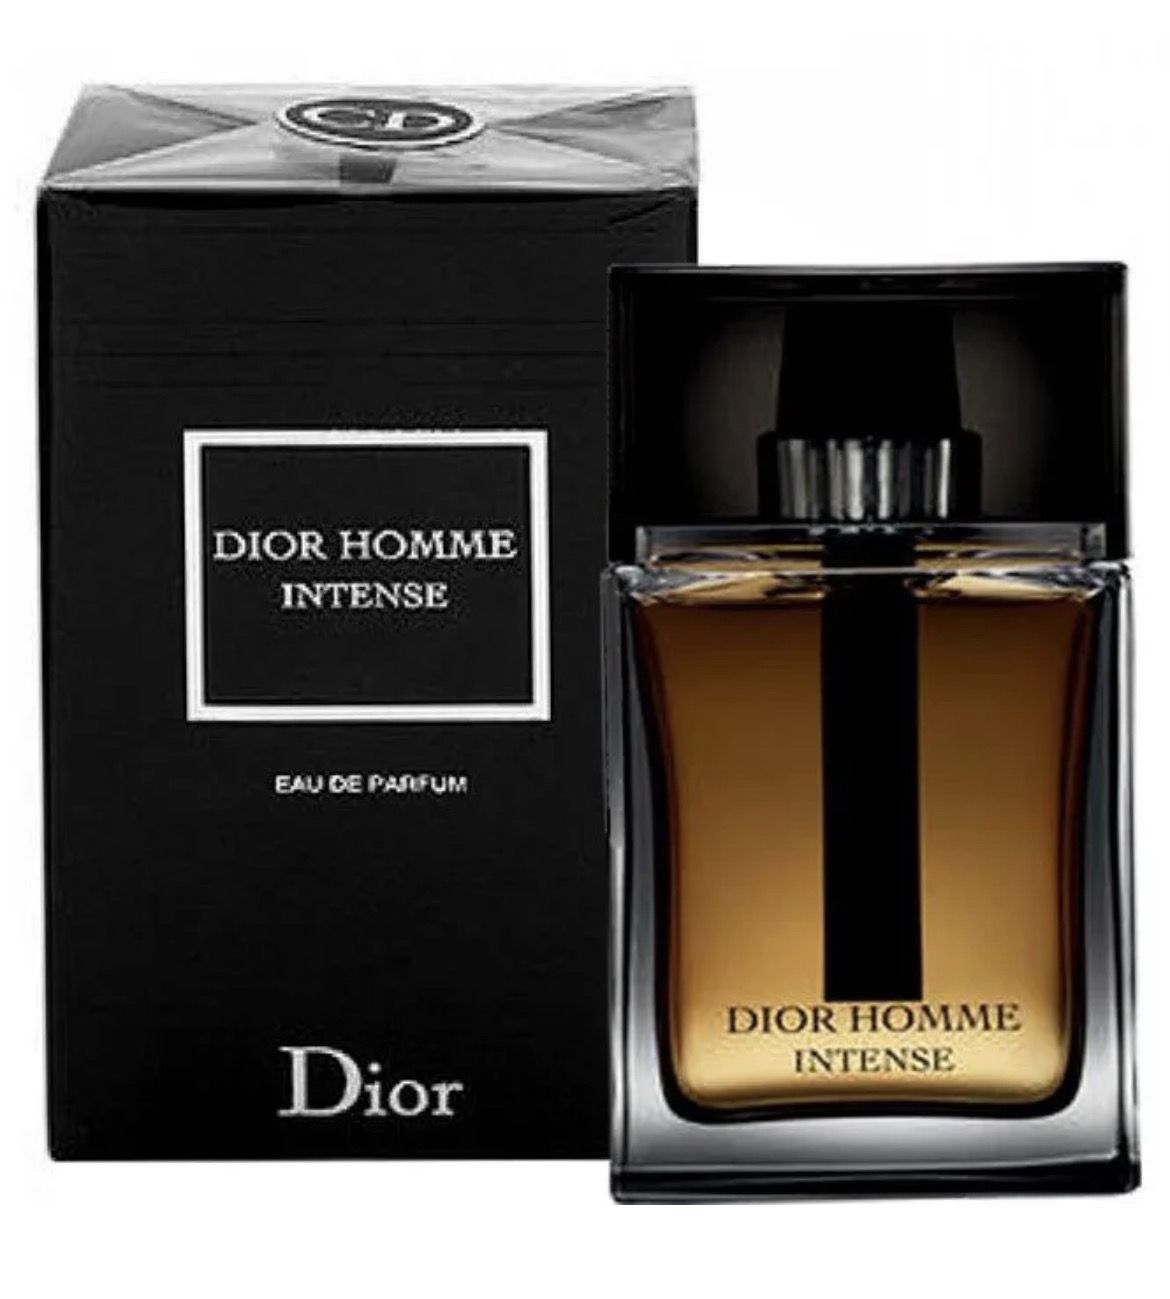 Туалетная вода интенс. Christian Dior homme intense 100ml. Christian Dior Dior homme intense. Dior homme intense 100ml. Dior homme intense духи 100 мл.